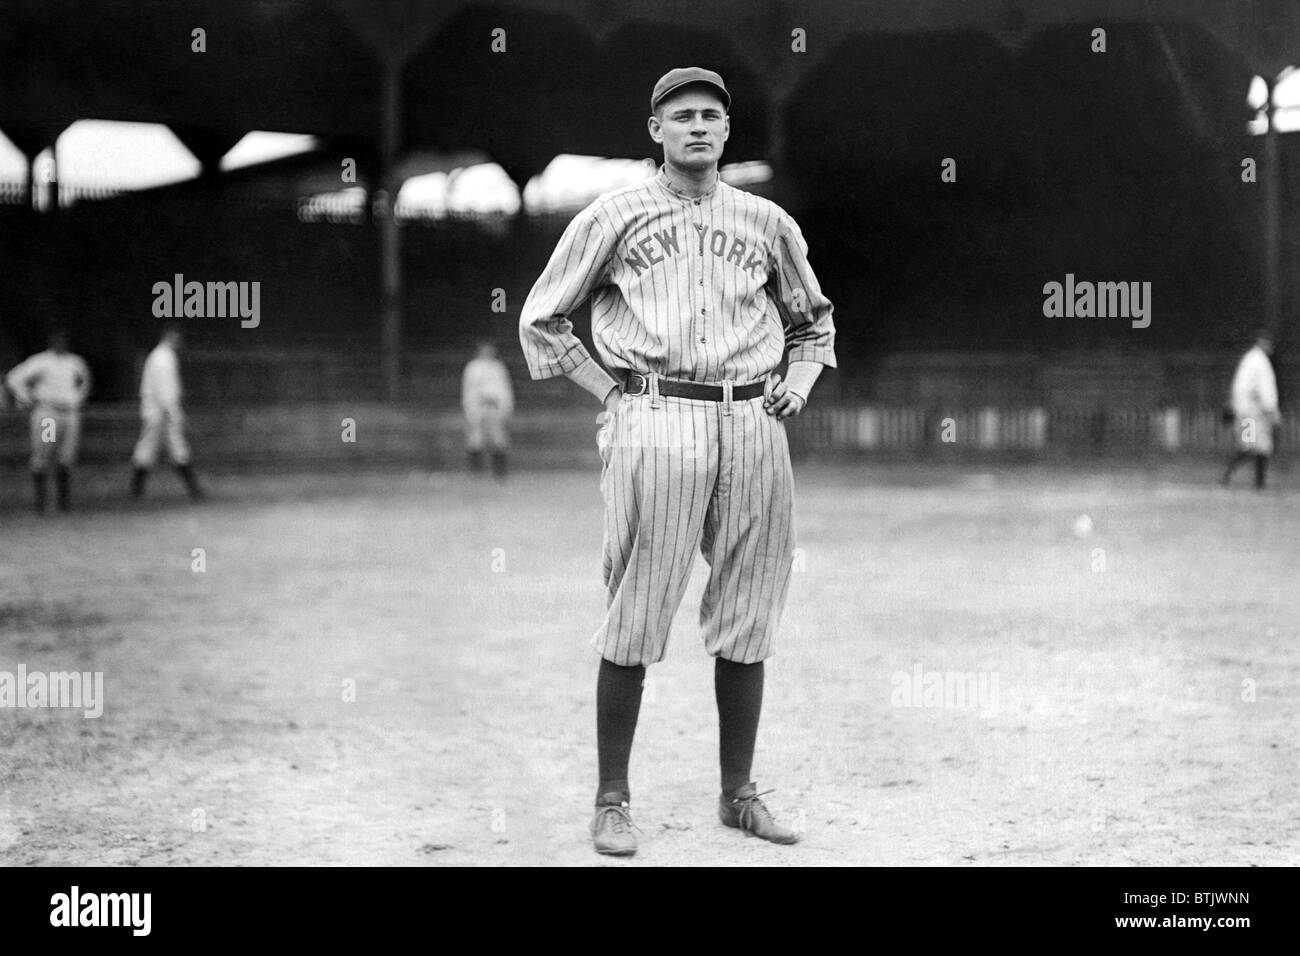 New York Yankee Wally Pipp, c. 1917. Stock Photo